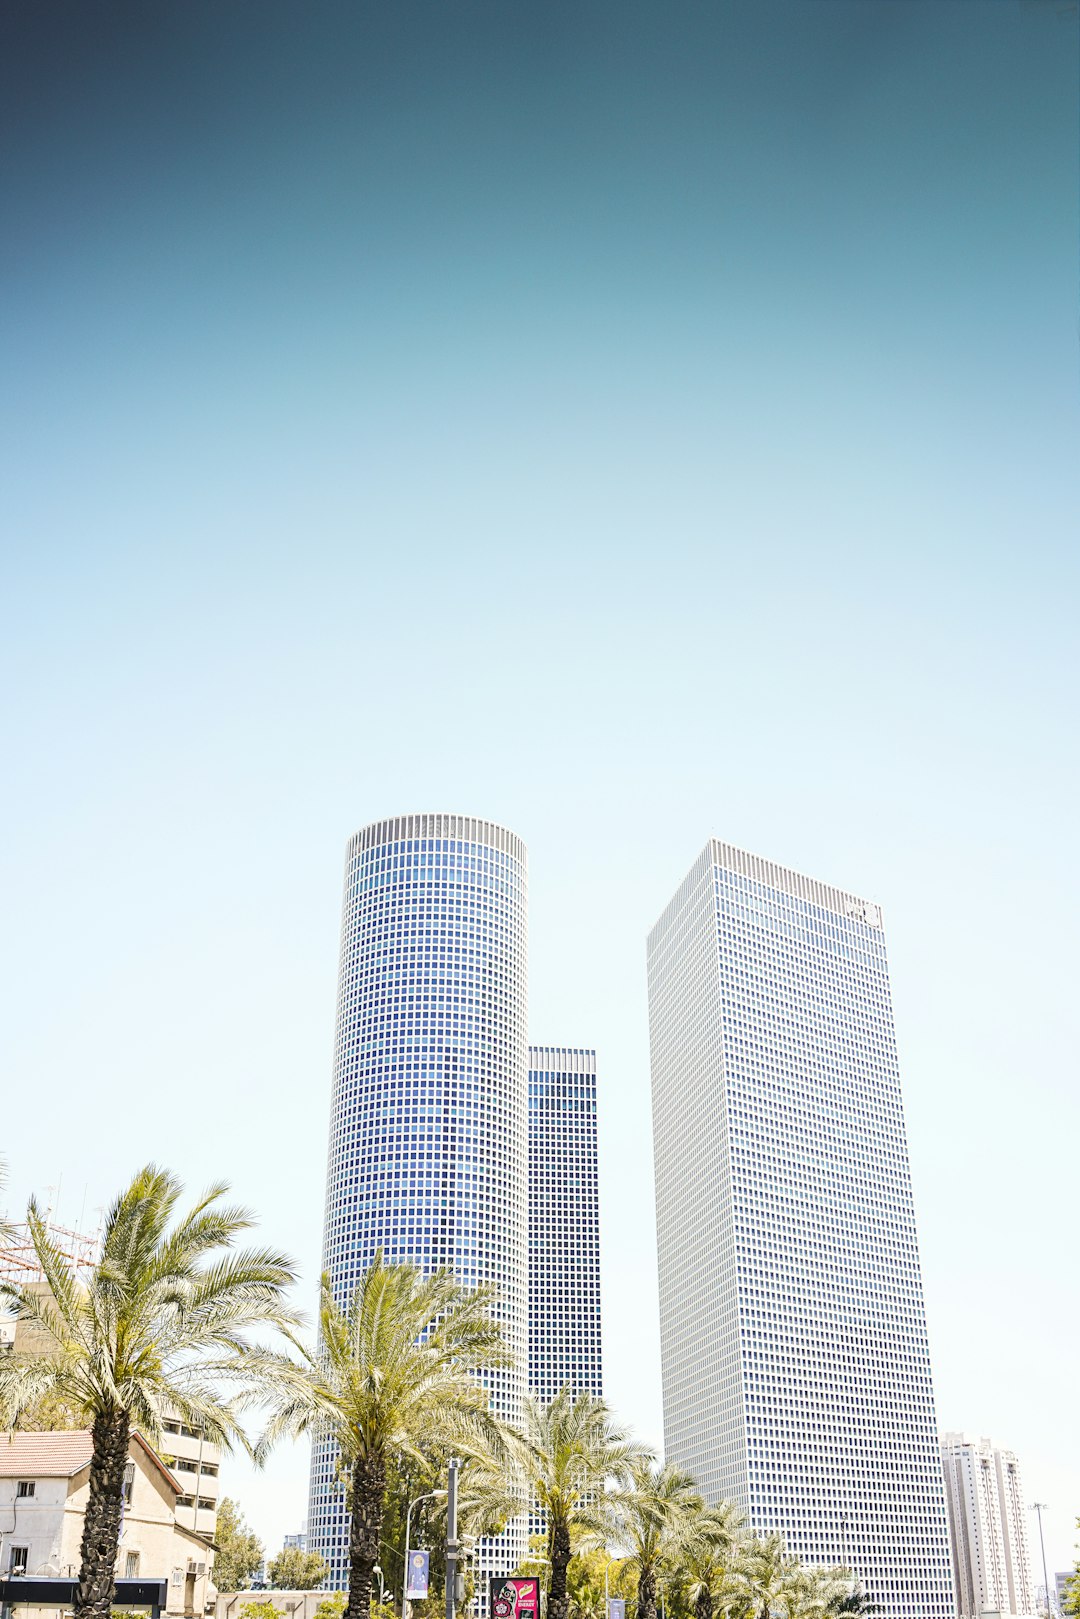 three high-rise buildings near palm trees